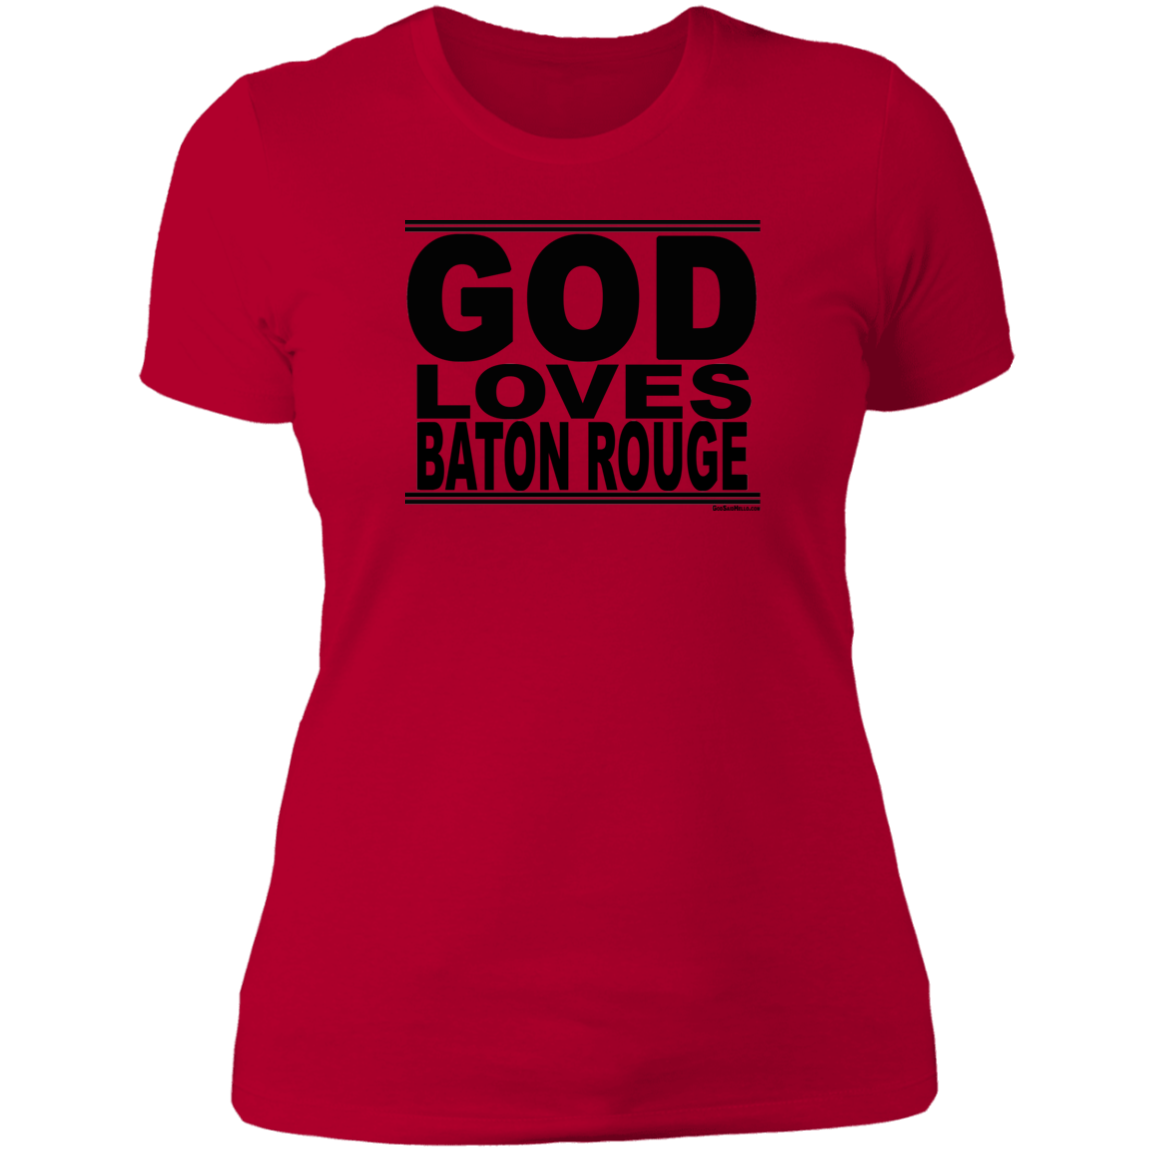 #GodLovesBatonRouge - Women's Shortsleeve Tee